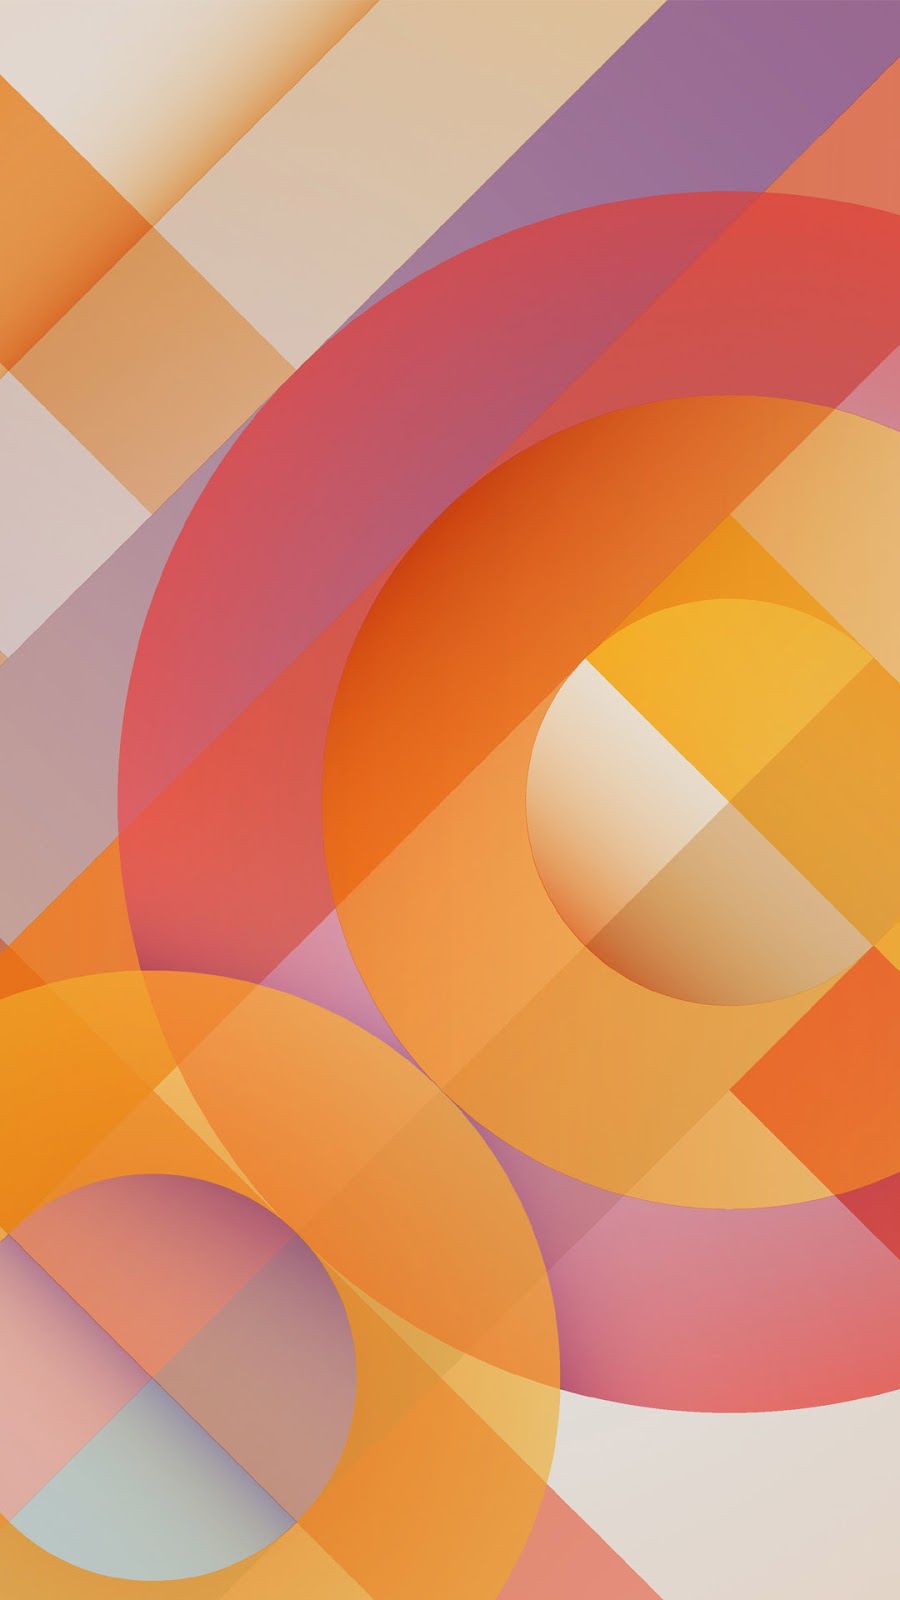 Wallpaper Android Abstrak Colorful Lingkaran